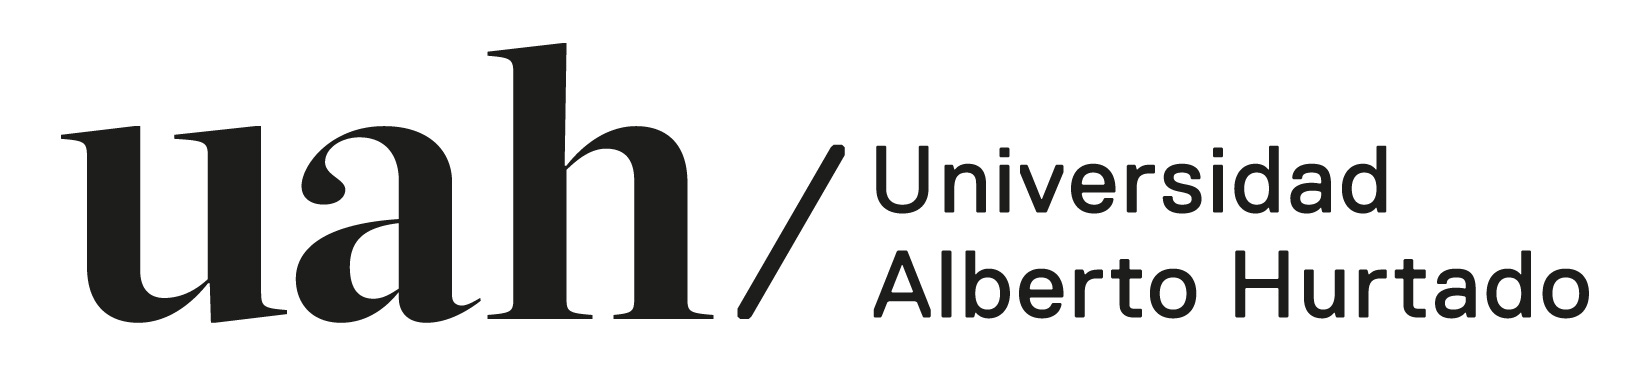 File:Logo uah negro-01.jpg - Wikimedia Commons